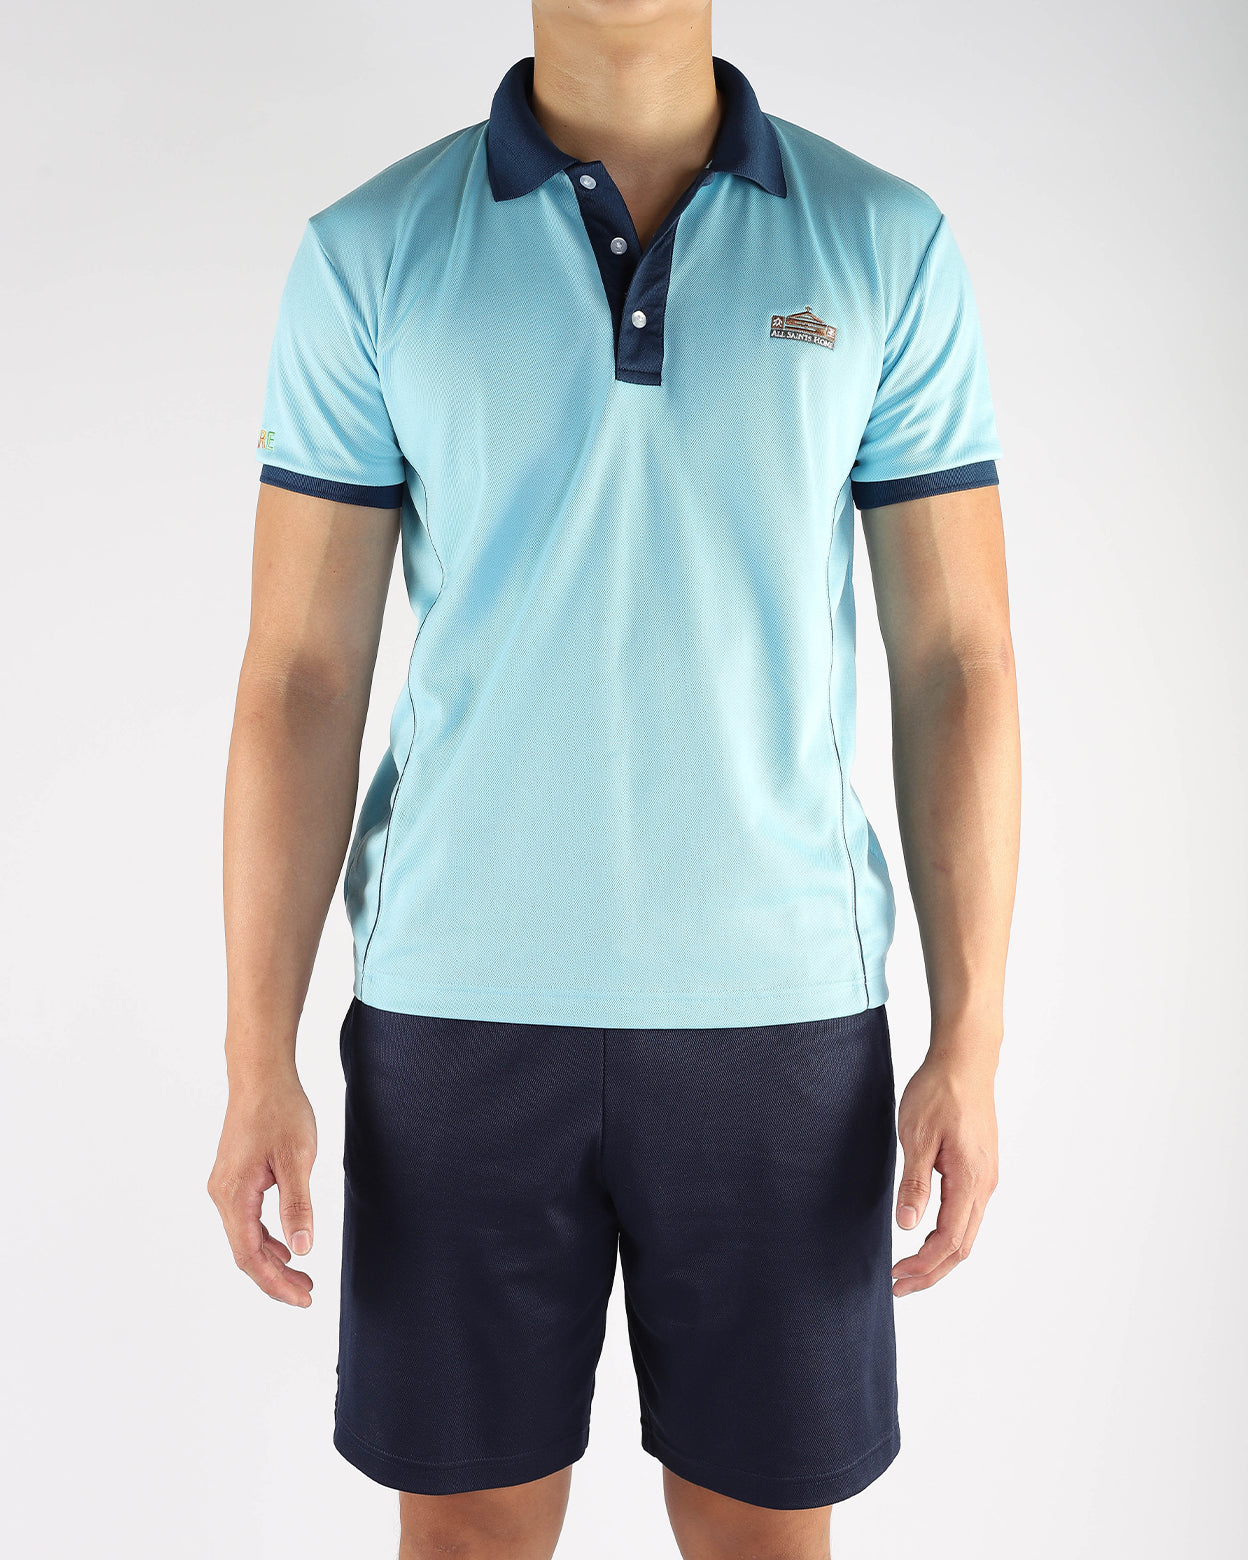 Men's Polo Tee Shirt Uniform with Custom Logo